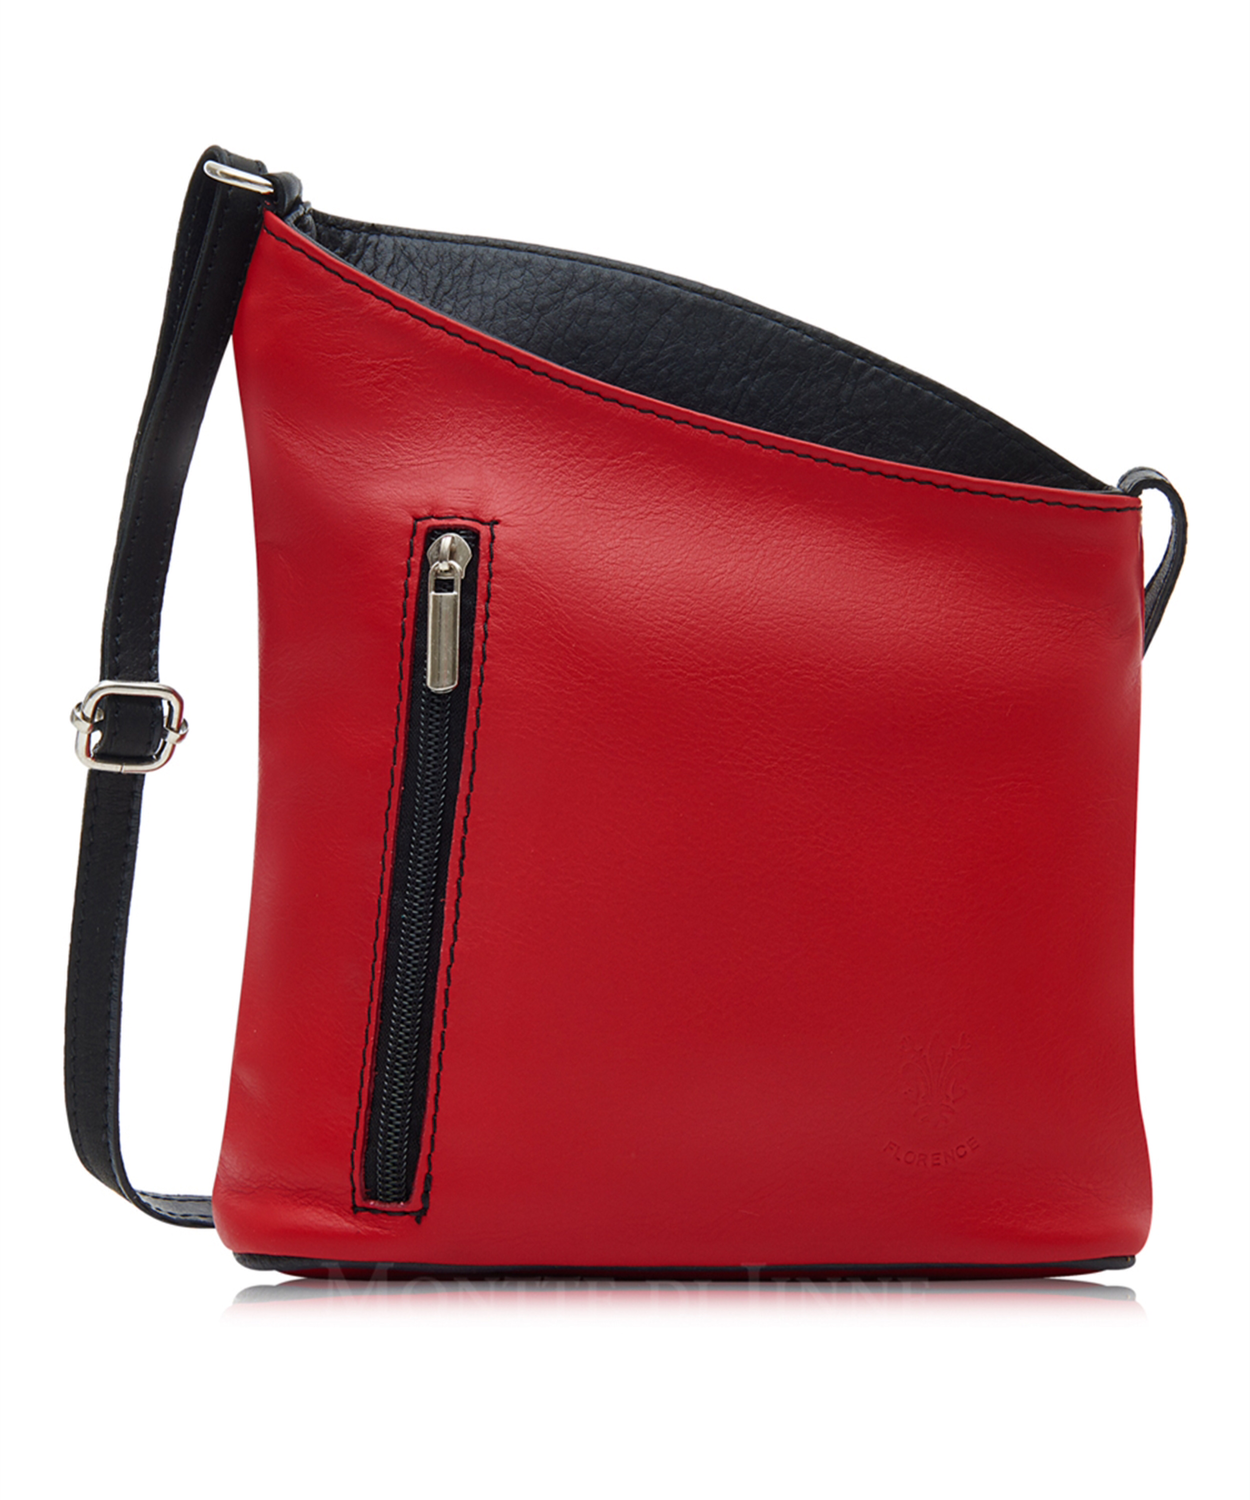 Red With Black Soft Leather Angled Shoulder Bag 